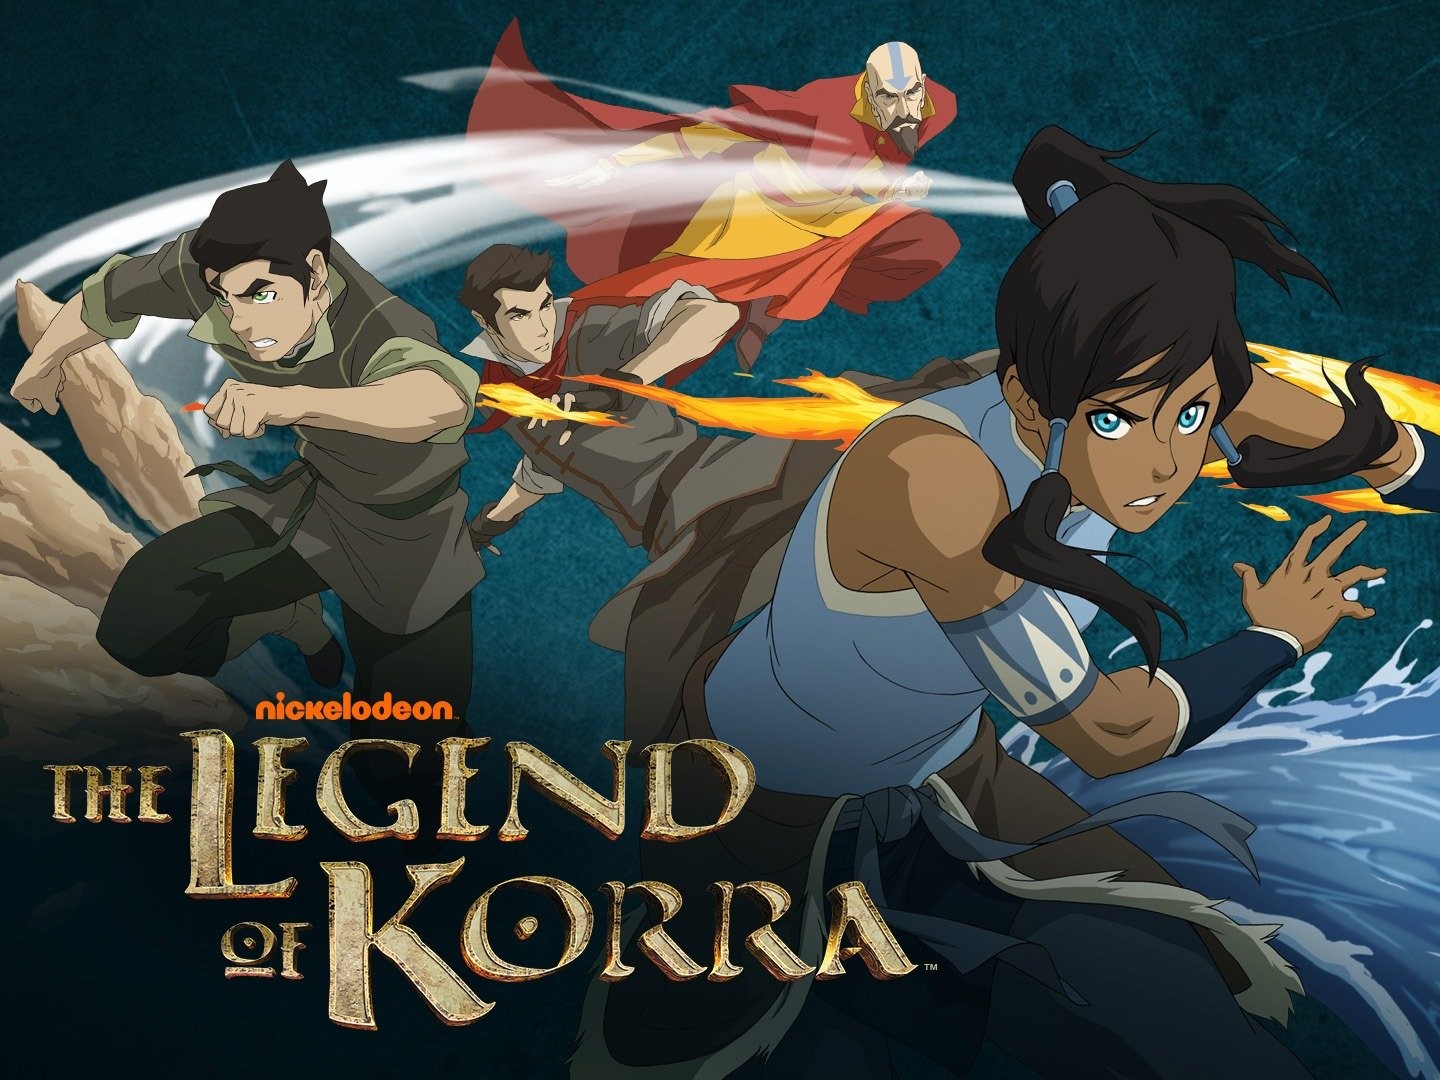 Avatar' on Netflix Reignited a Debate About 'the Legend of Korra'